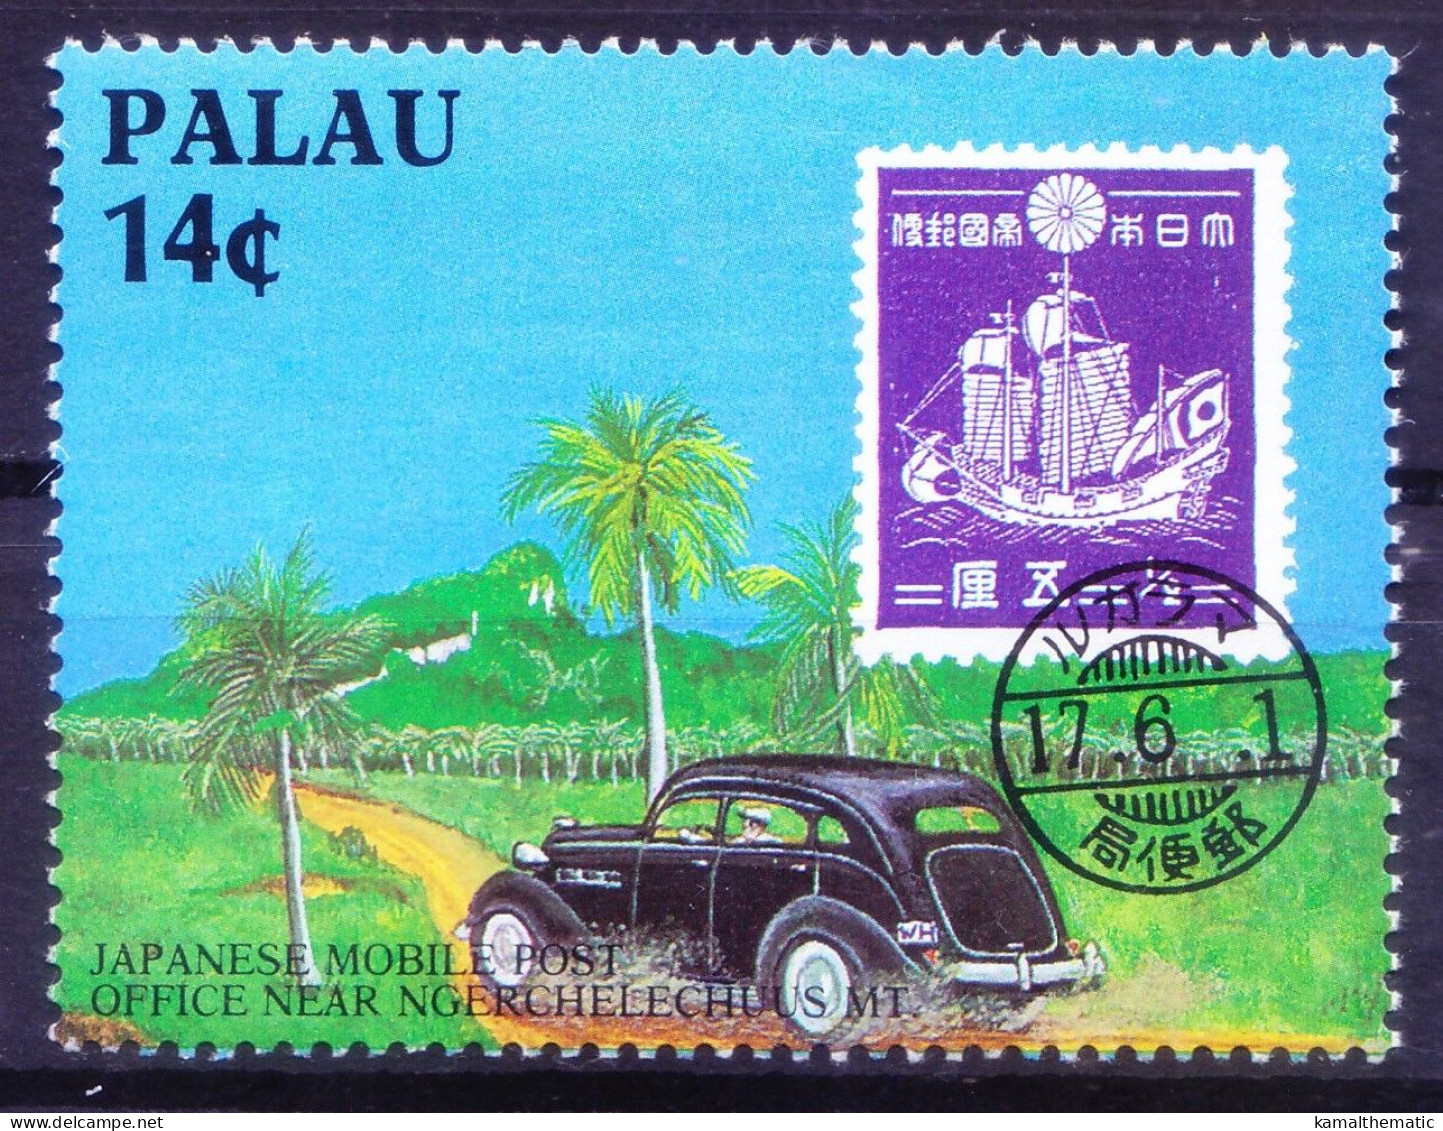 Palau 1987 MNH, Japanese Mobile Post Office, Cars, Stamp N Stamp, Ship - Post